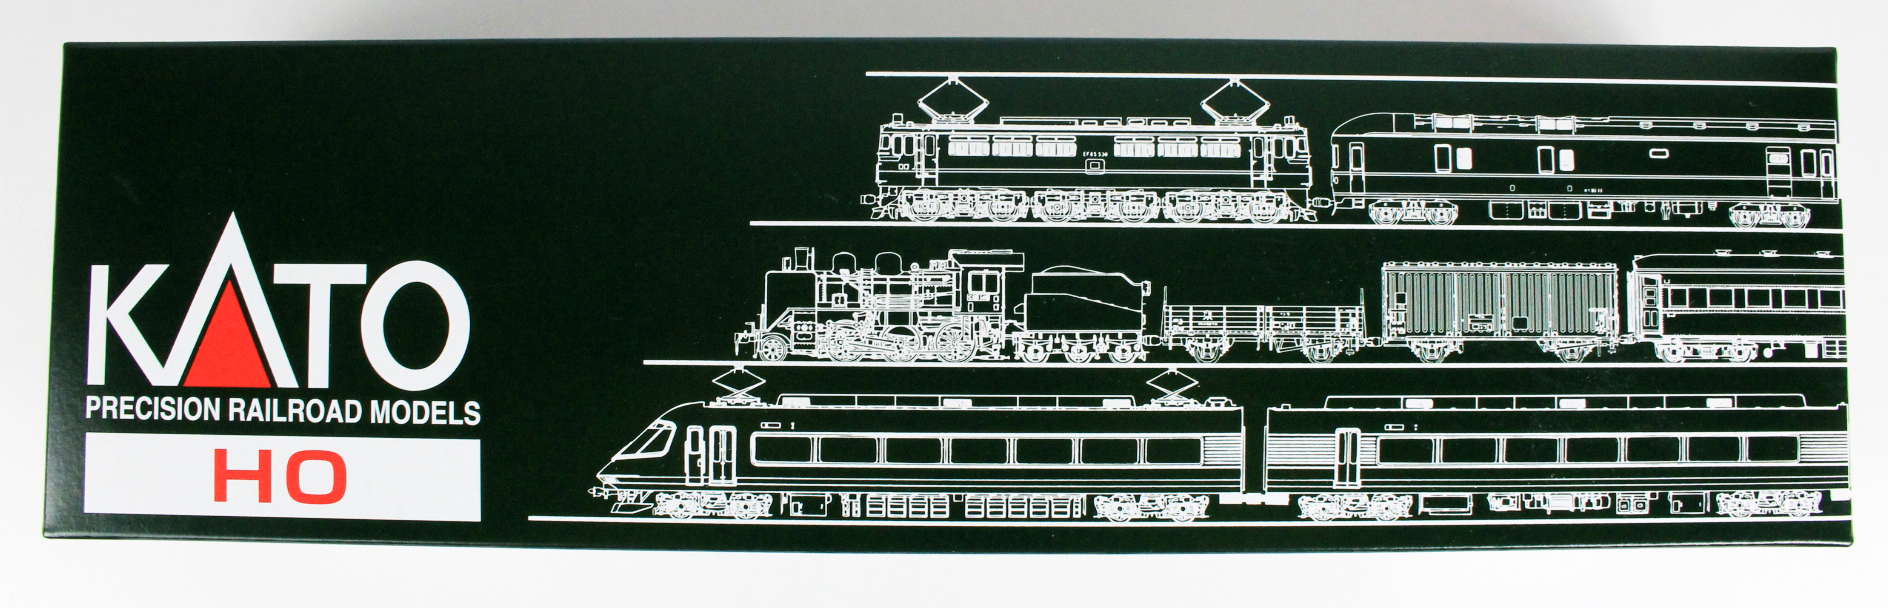 KATO 1-615 キハ110-200番台 M 鉄道模型 HOゲージ | 鉄道模型 通販 